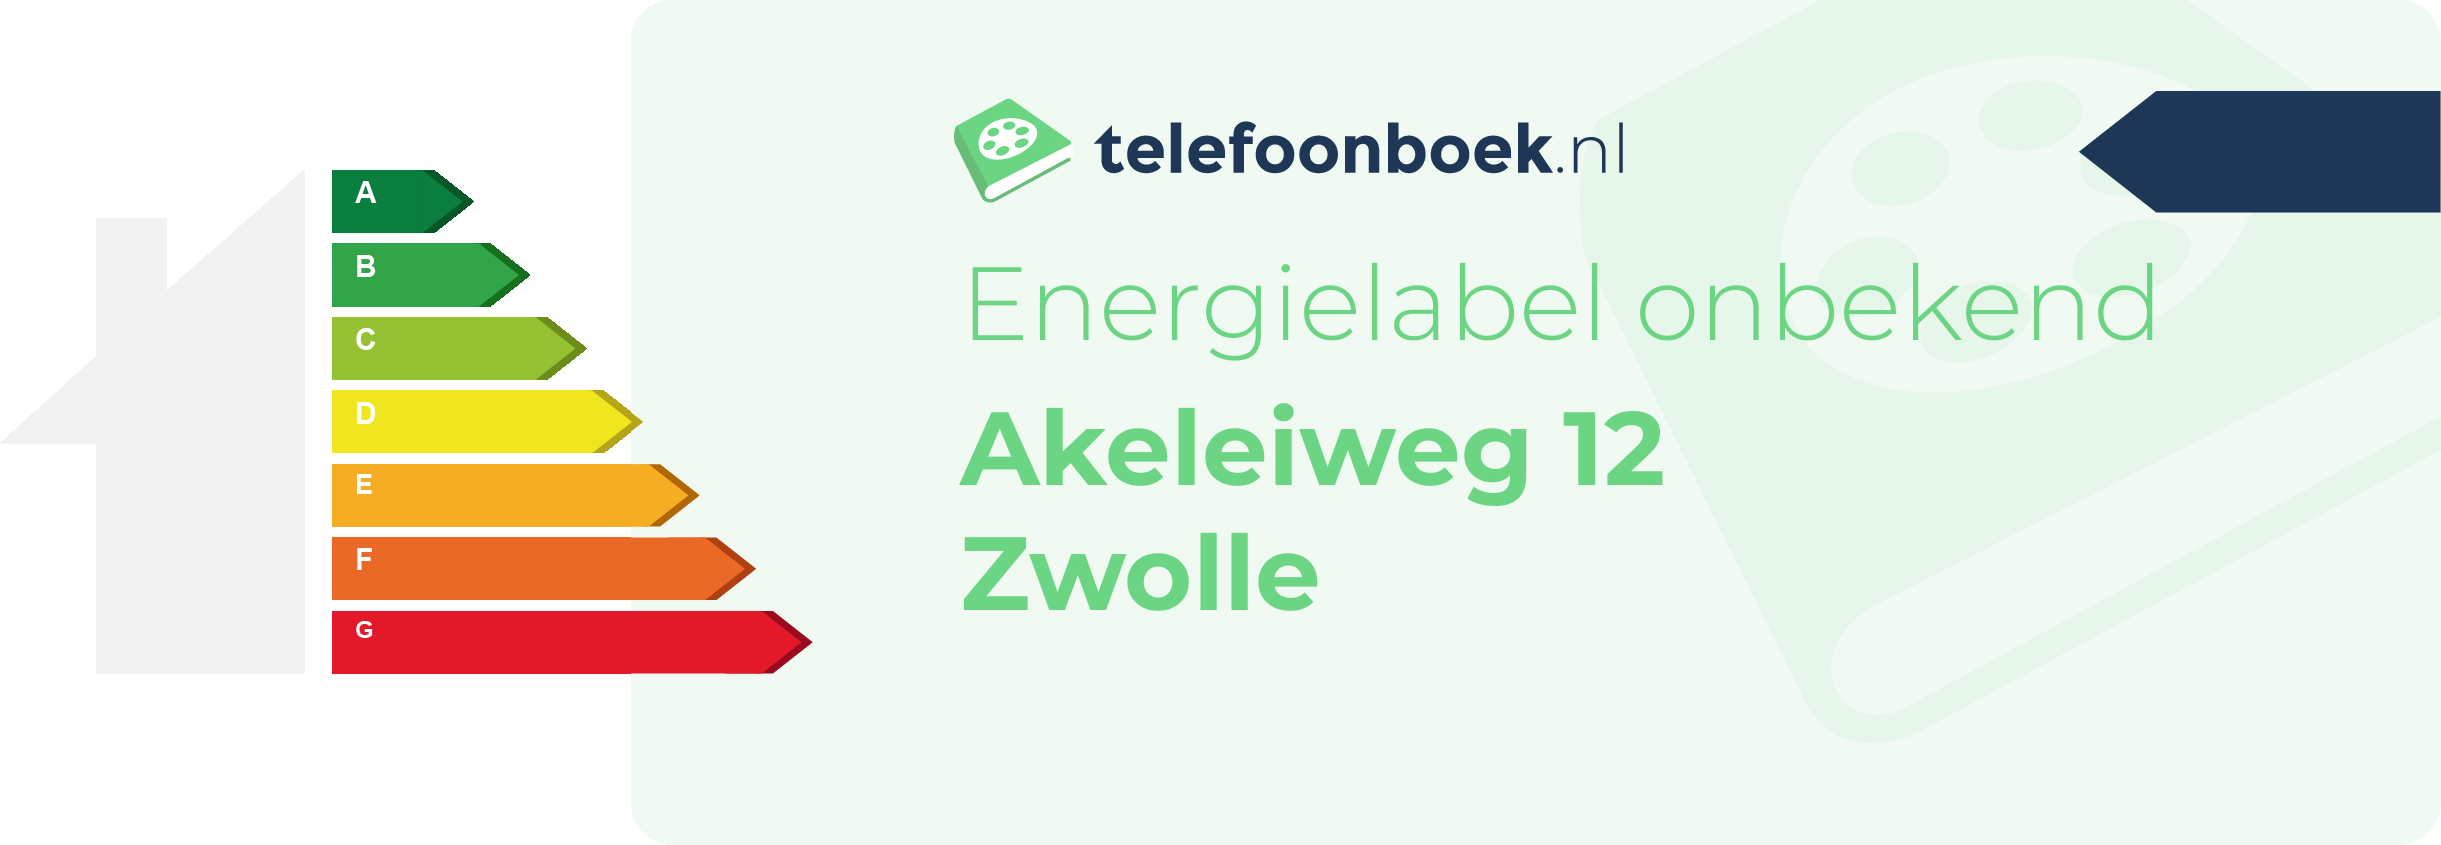 Energielabel Akeleiweg 12 Zwolle